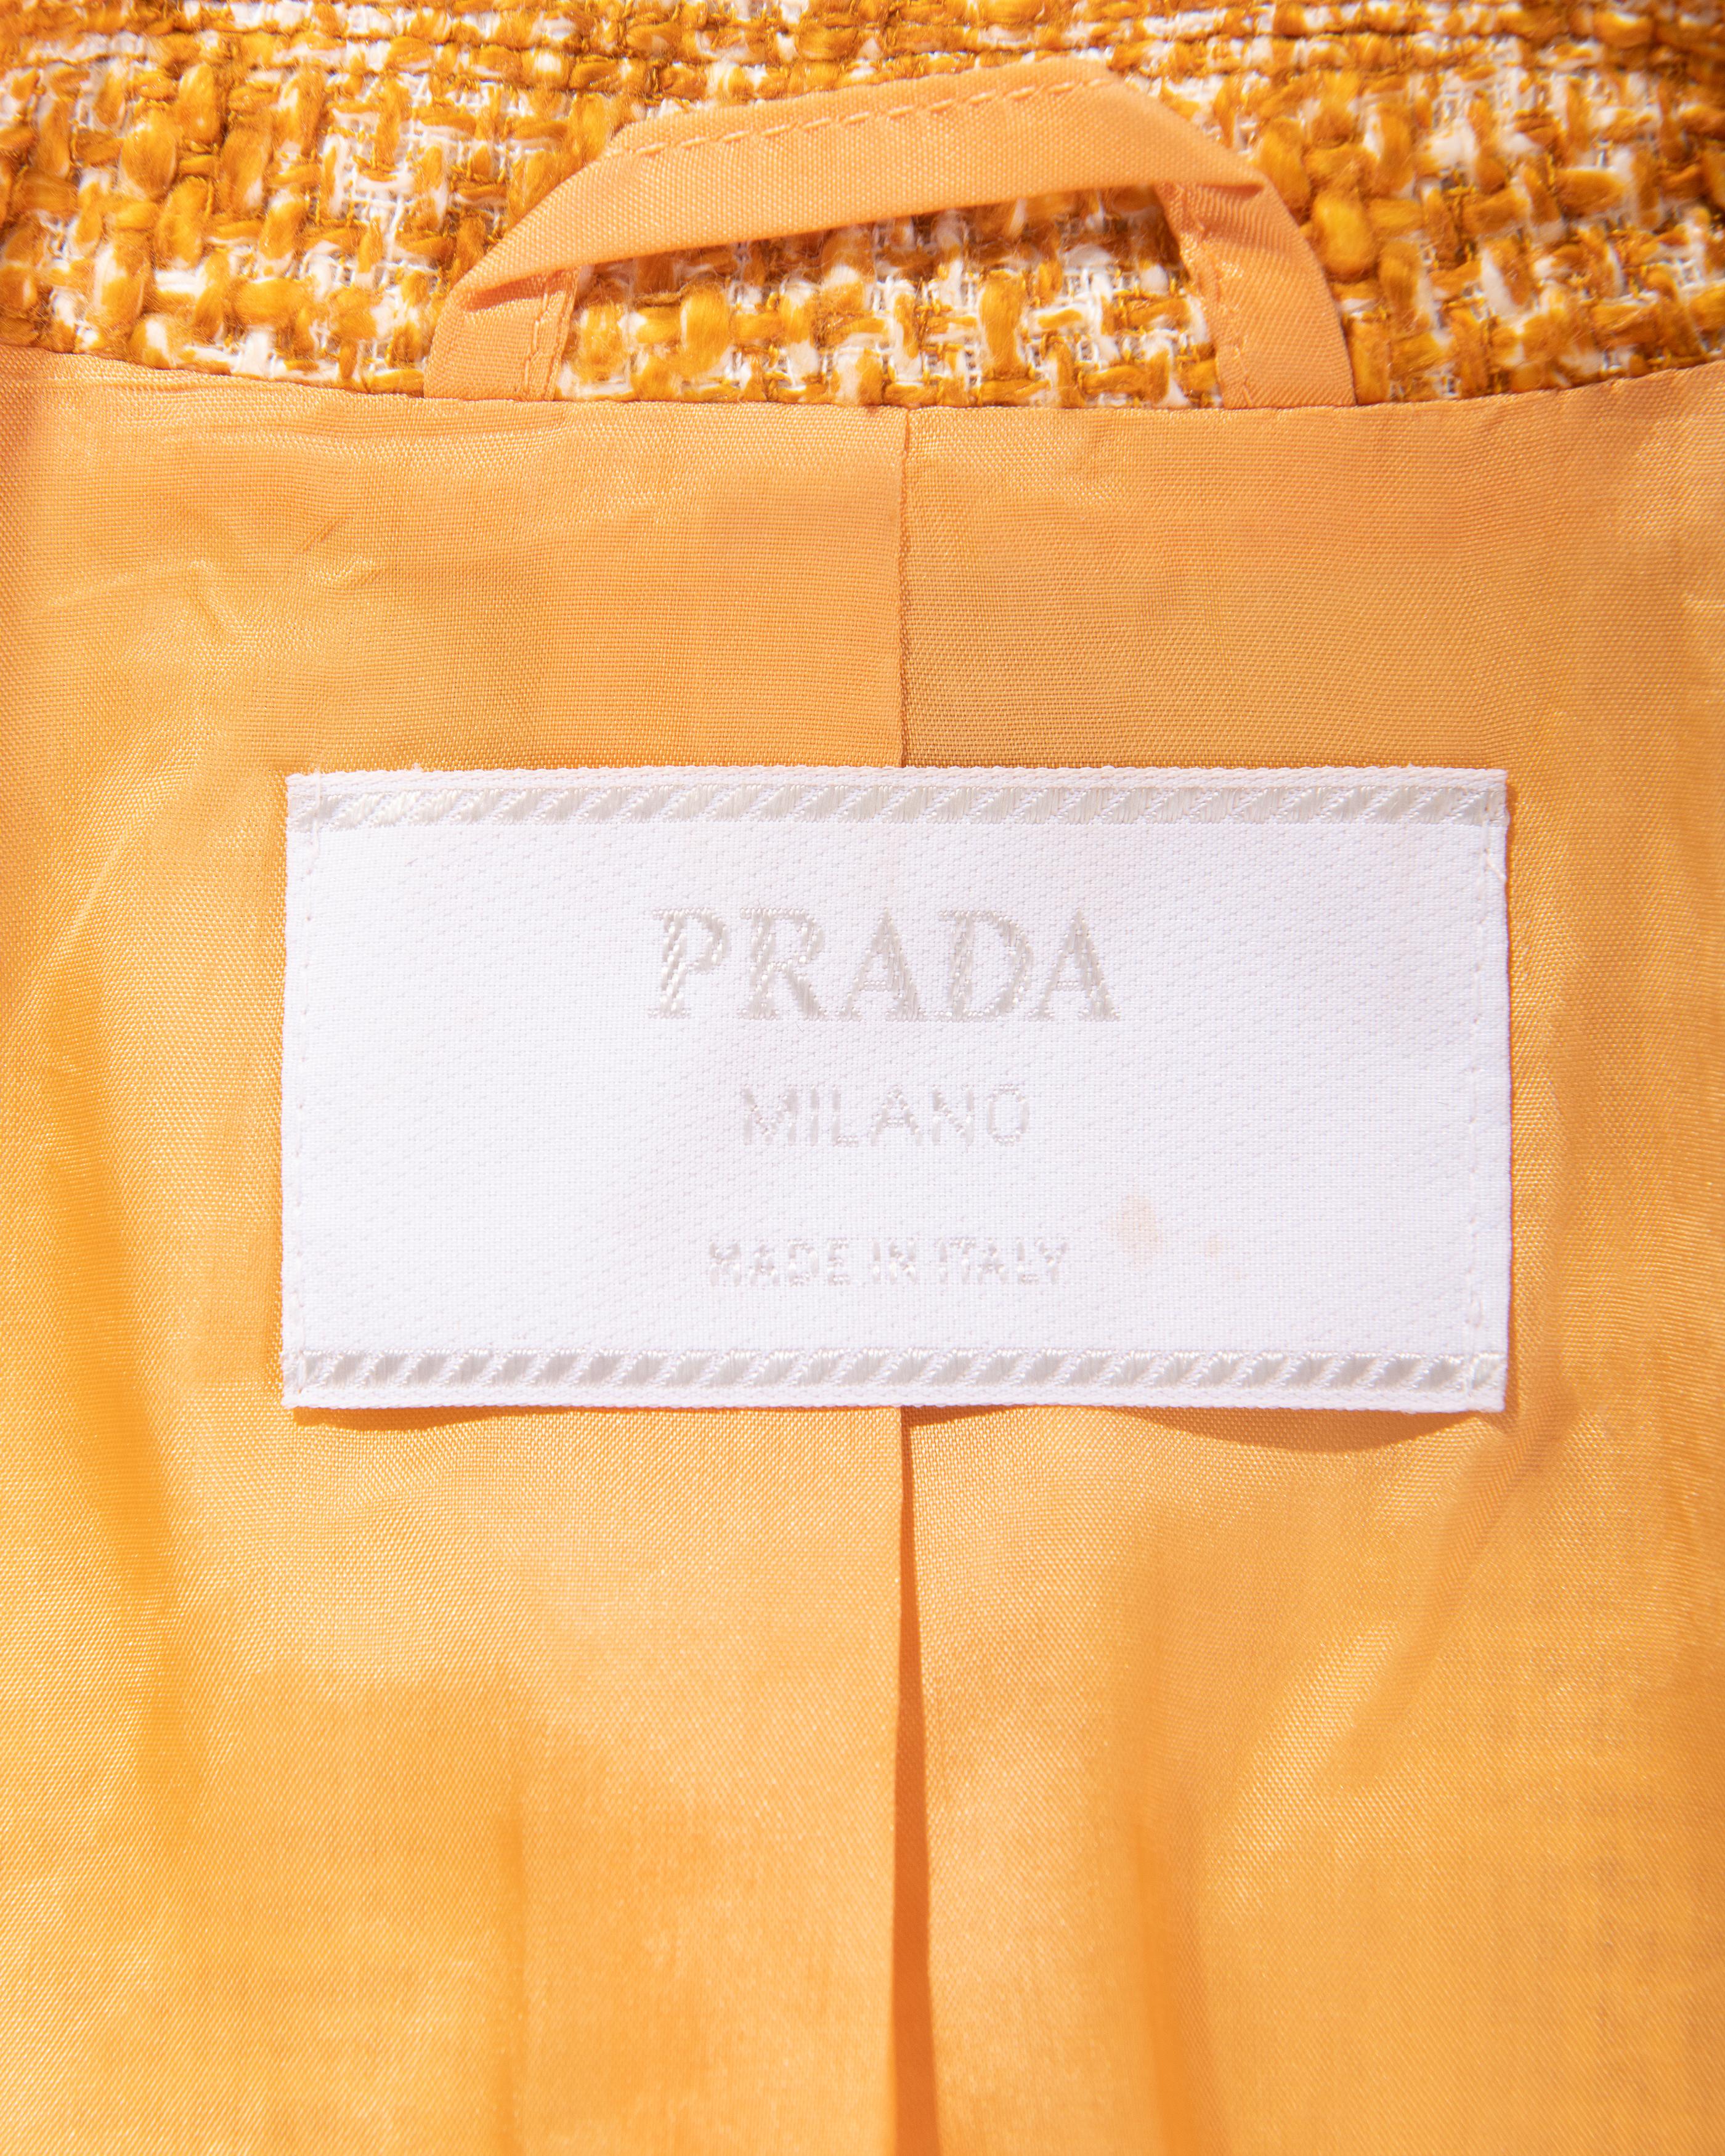 S/S 1996 Prada by Miuccia Prada Orange Tweed Skirt Set 11